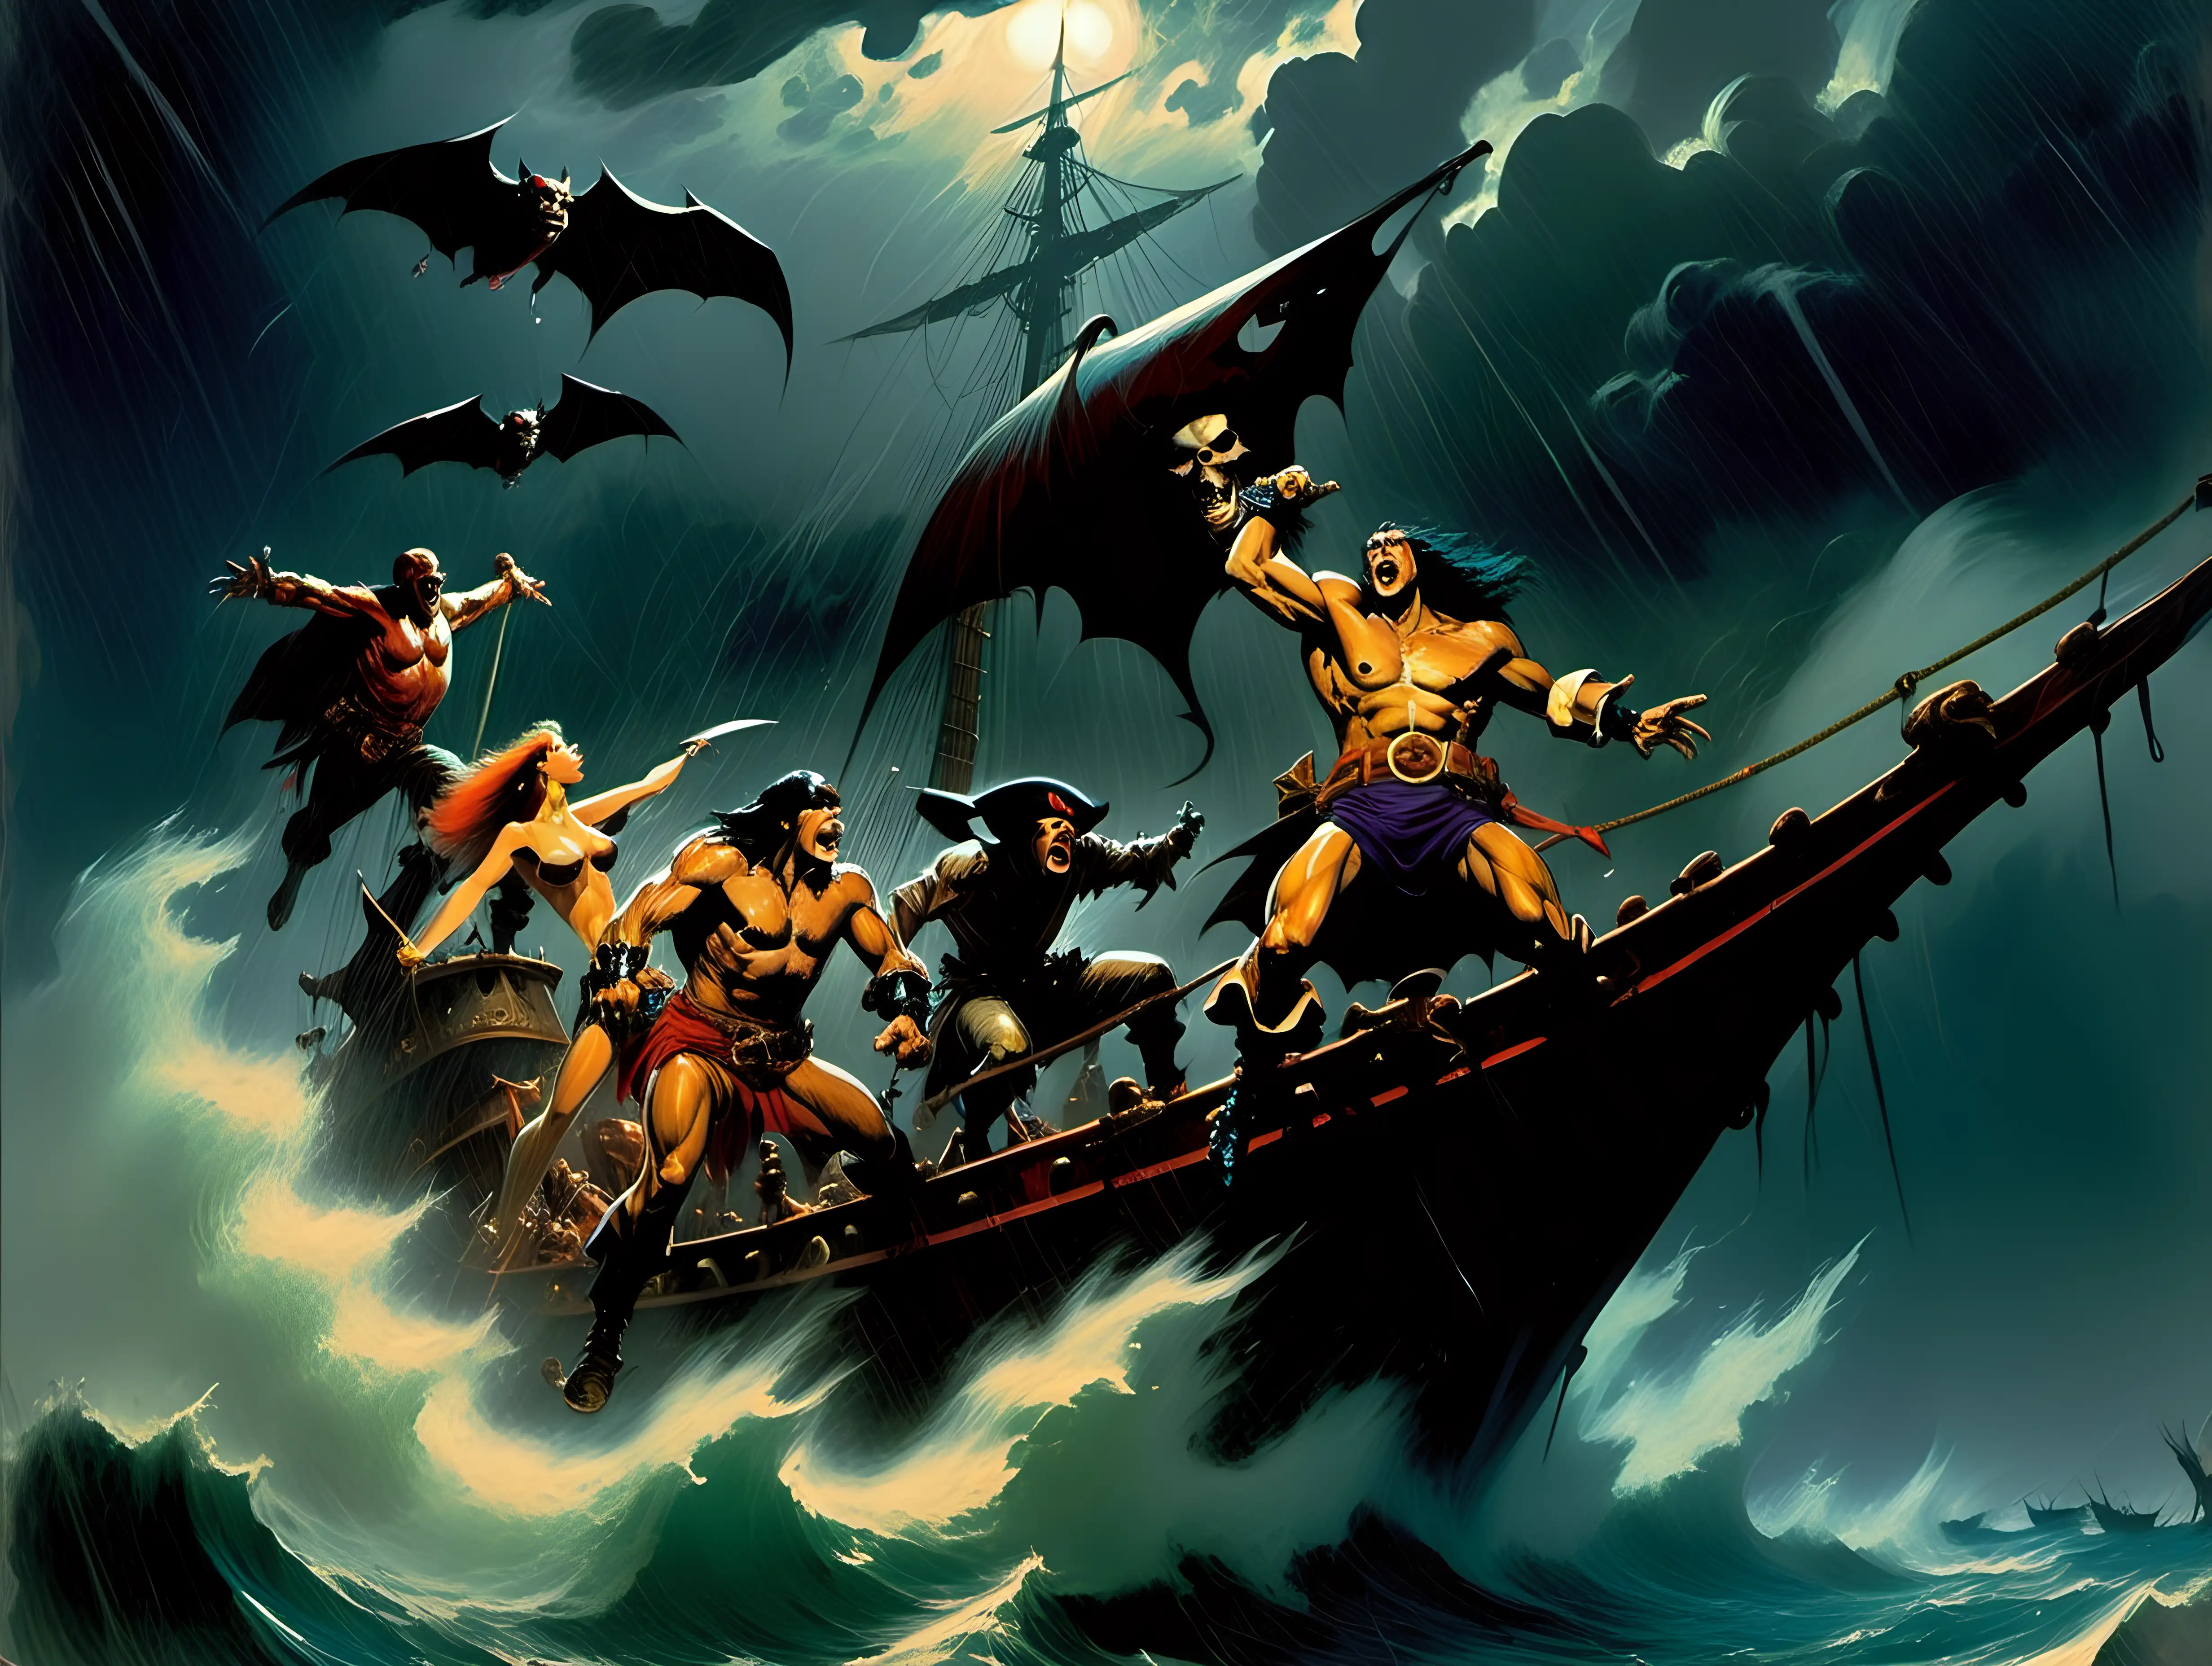 Captain Sinbad Battling Pirates and Vampire Bats in Heavy Rain Storm Epic Seas Adventure